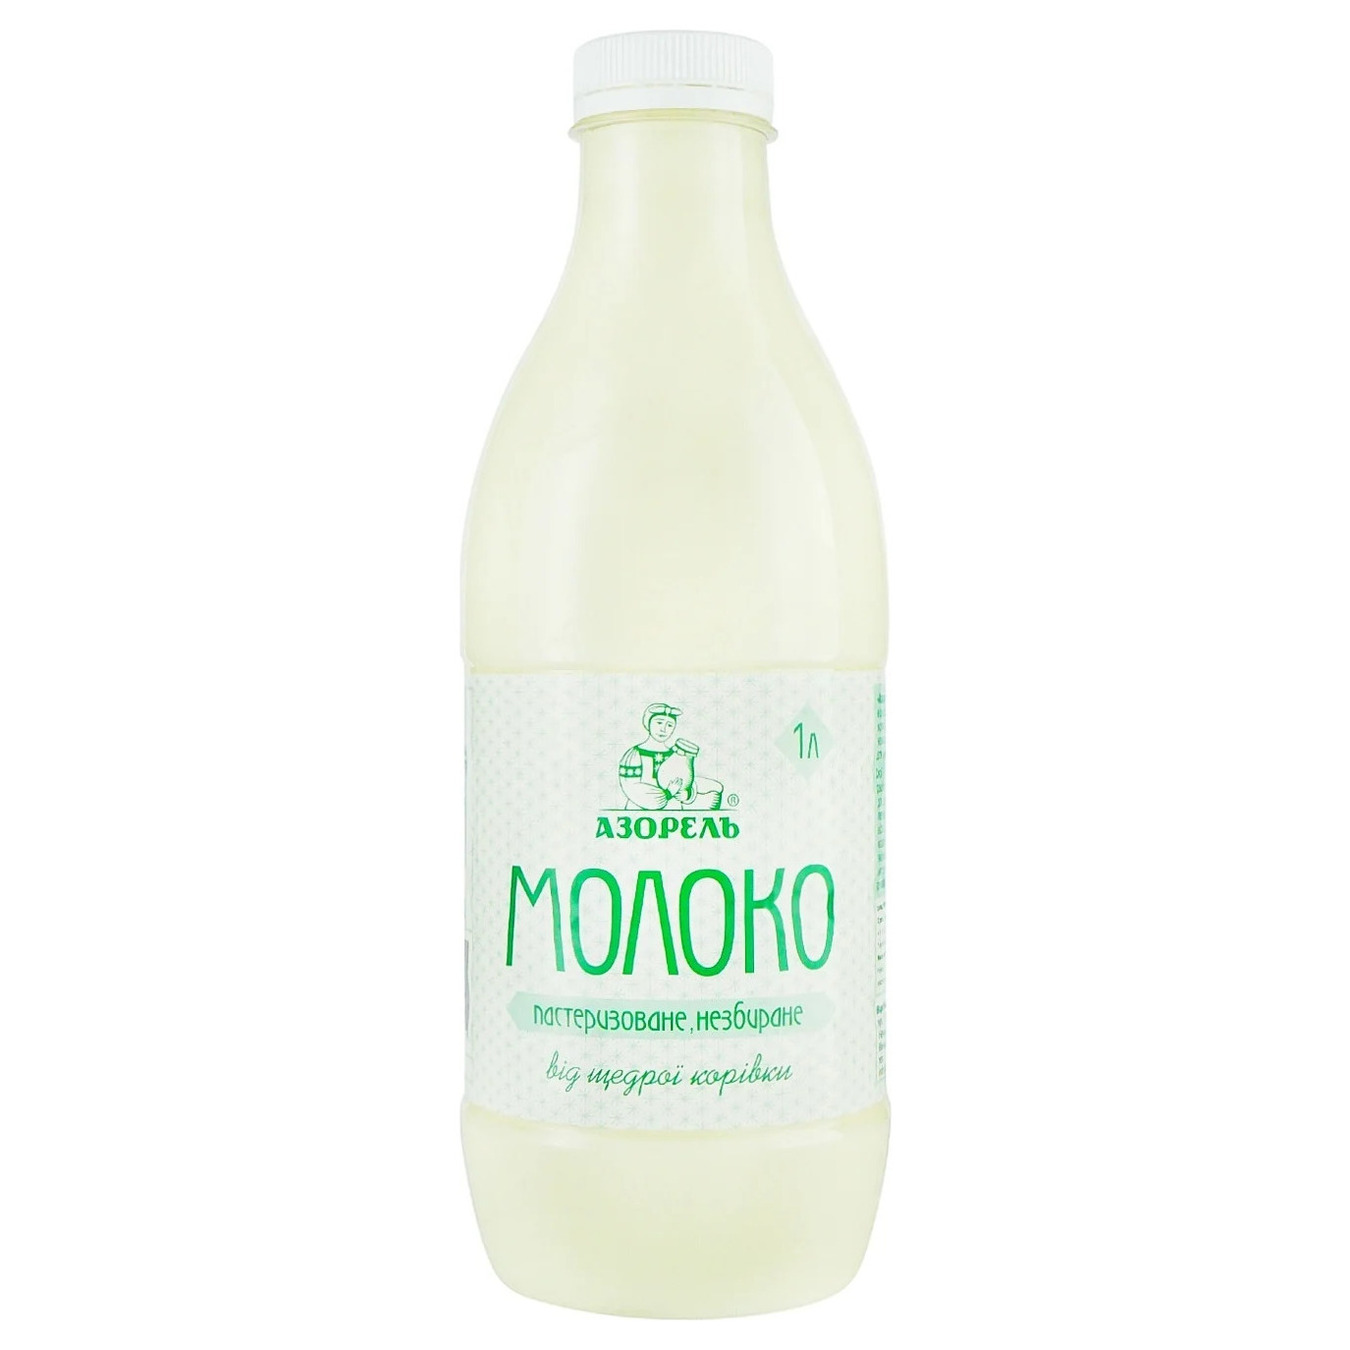 Azorel pasteurized whole milk 3.6-4% 1 liter bottle